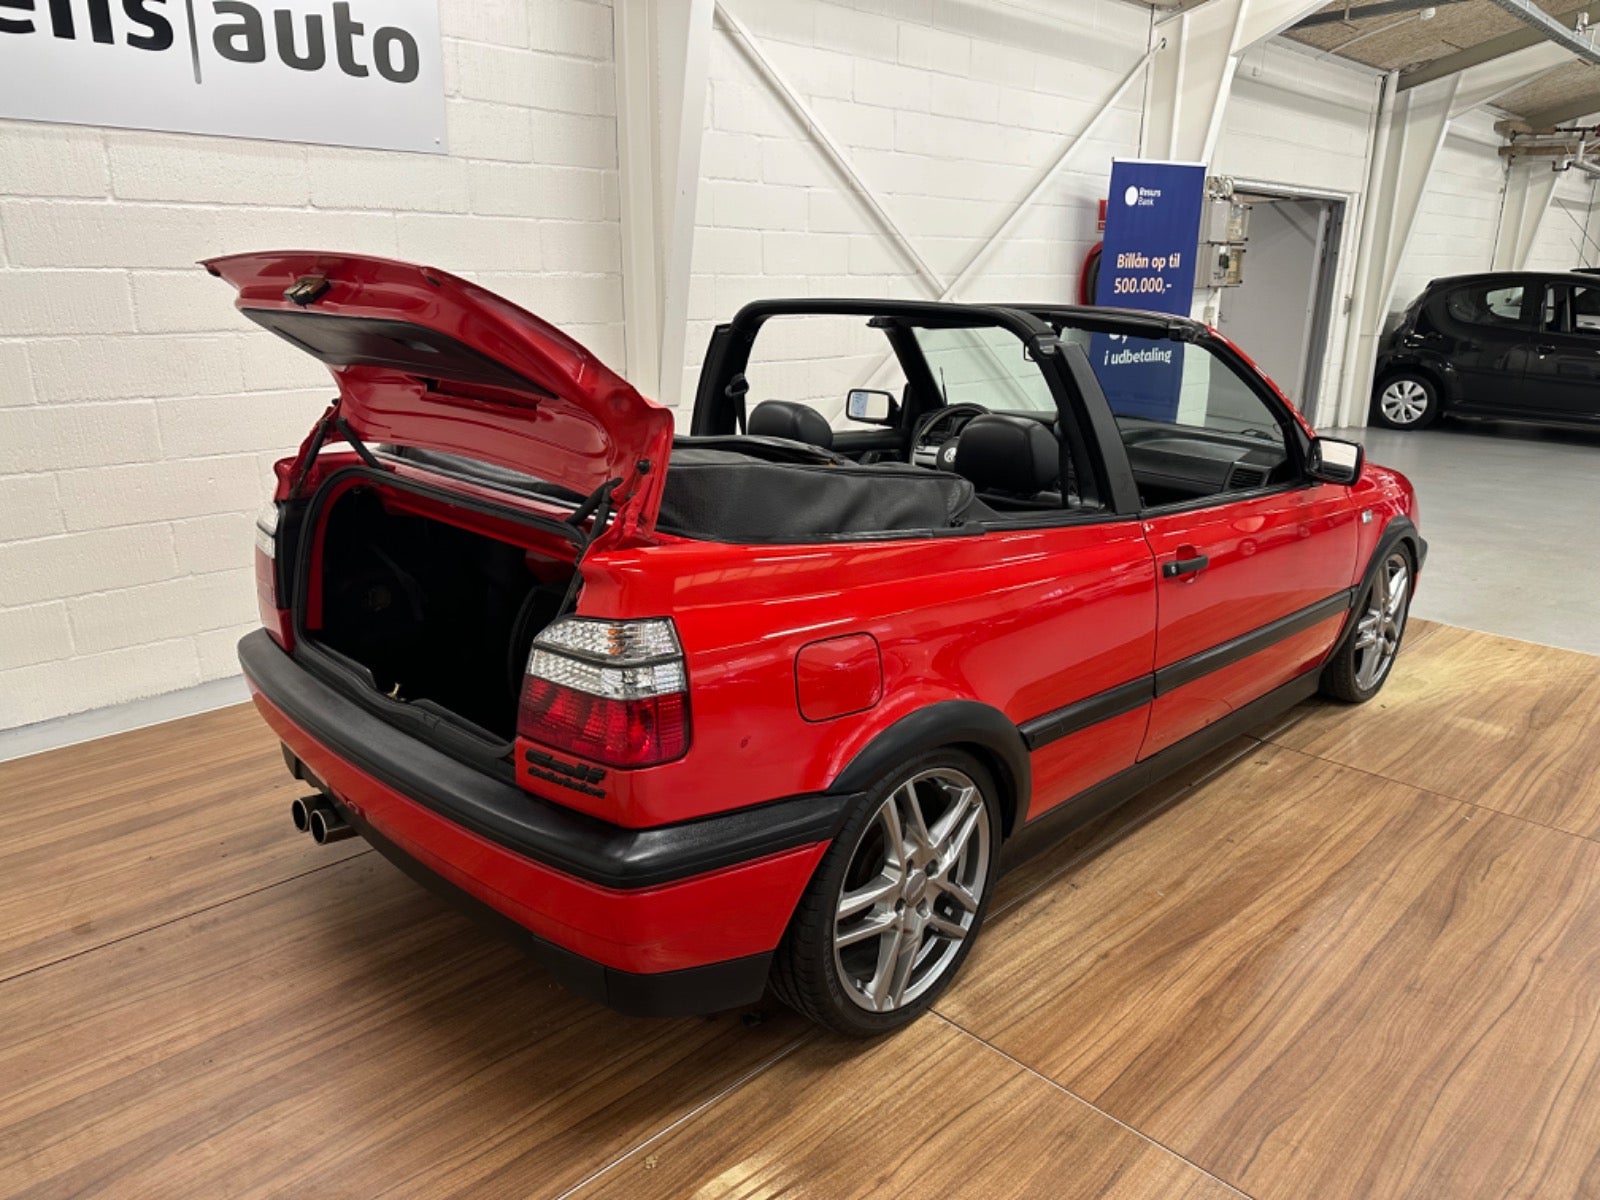 VW Golf III 1994